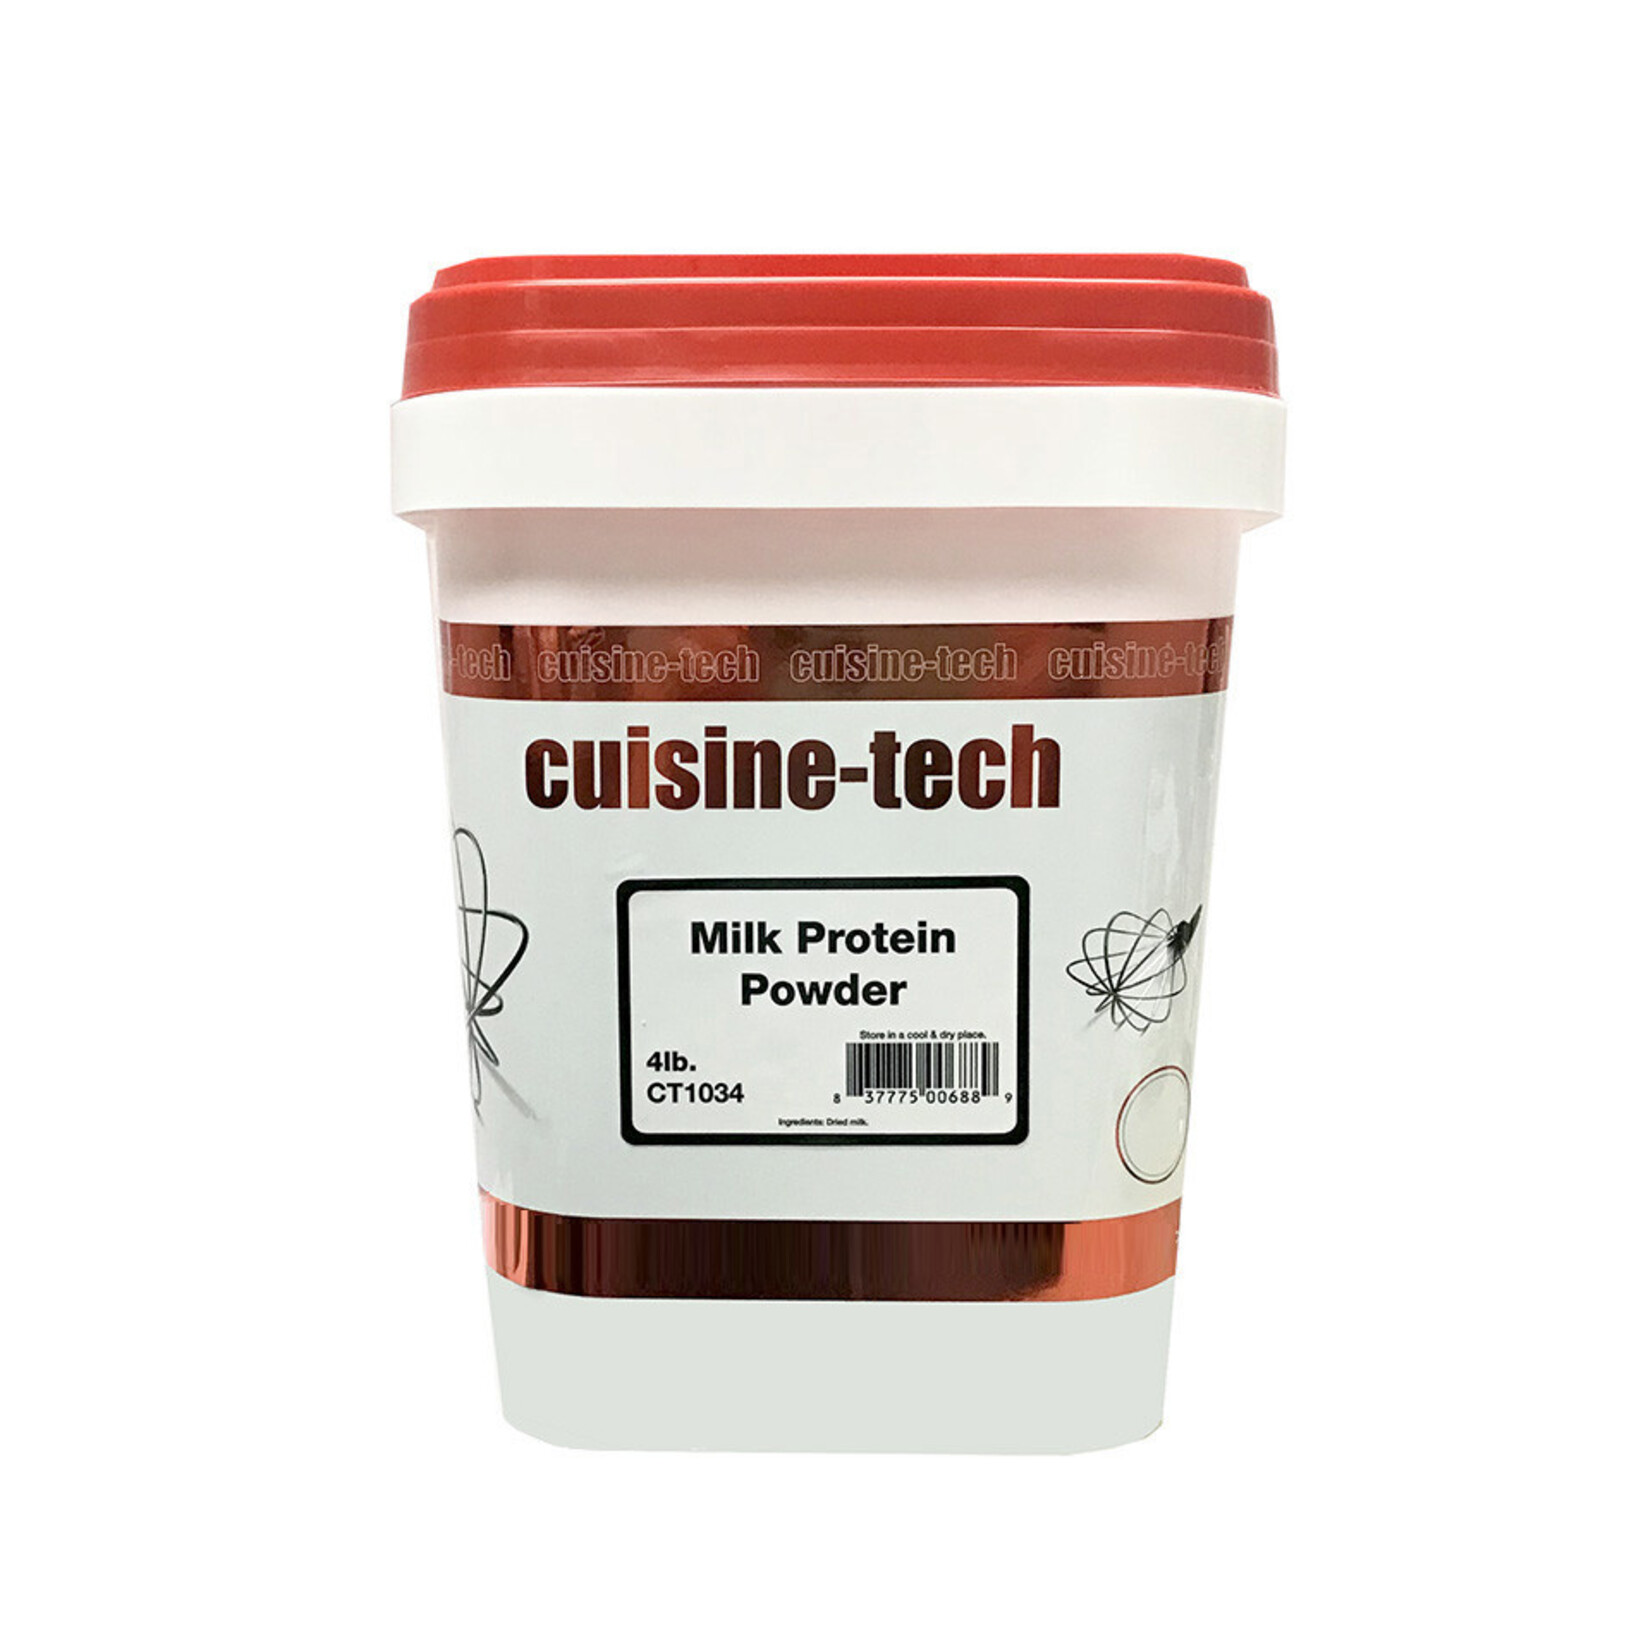 Cuisine Tech Cuisine Tech - Milk Protein Powder 80% - 4 lb